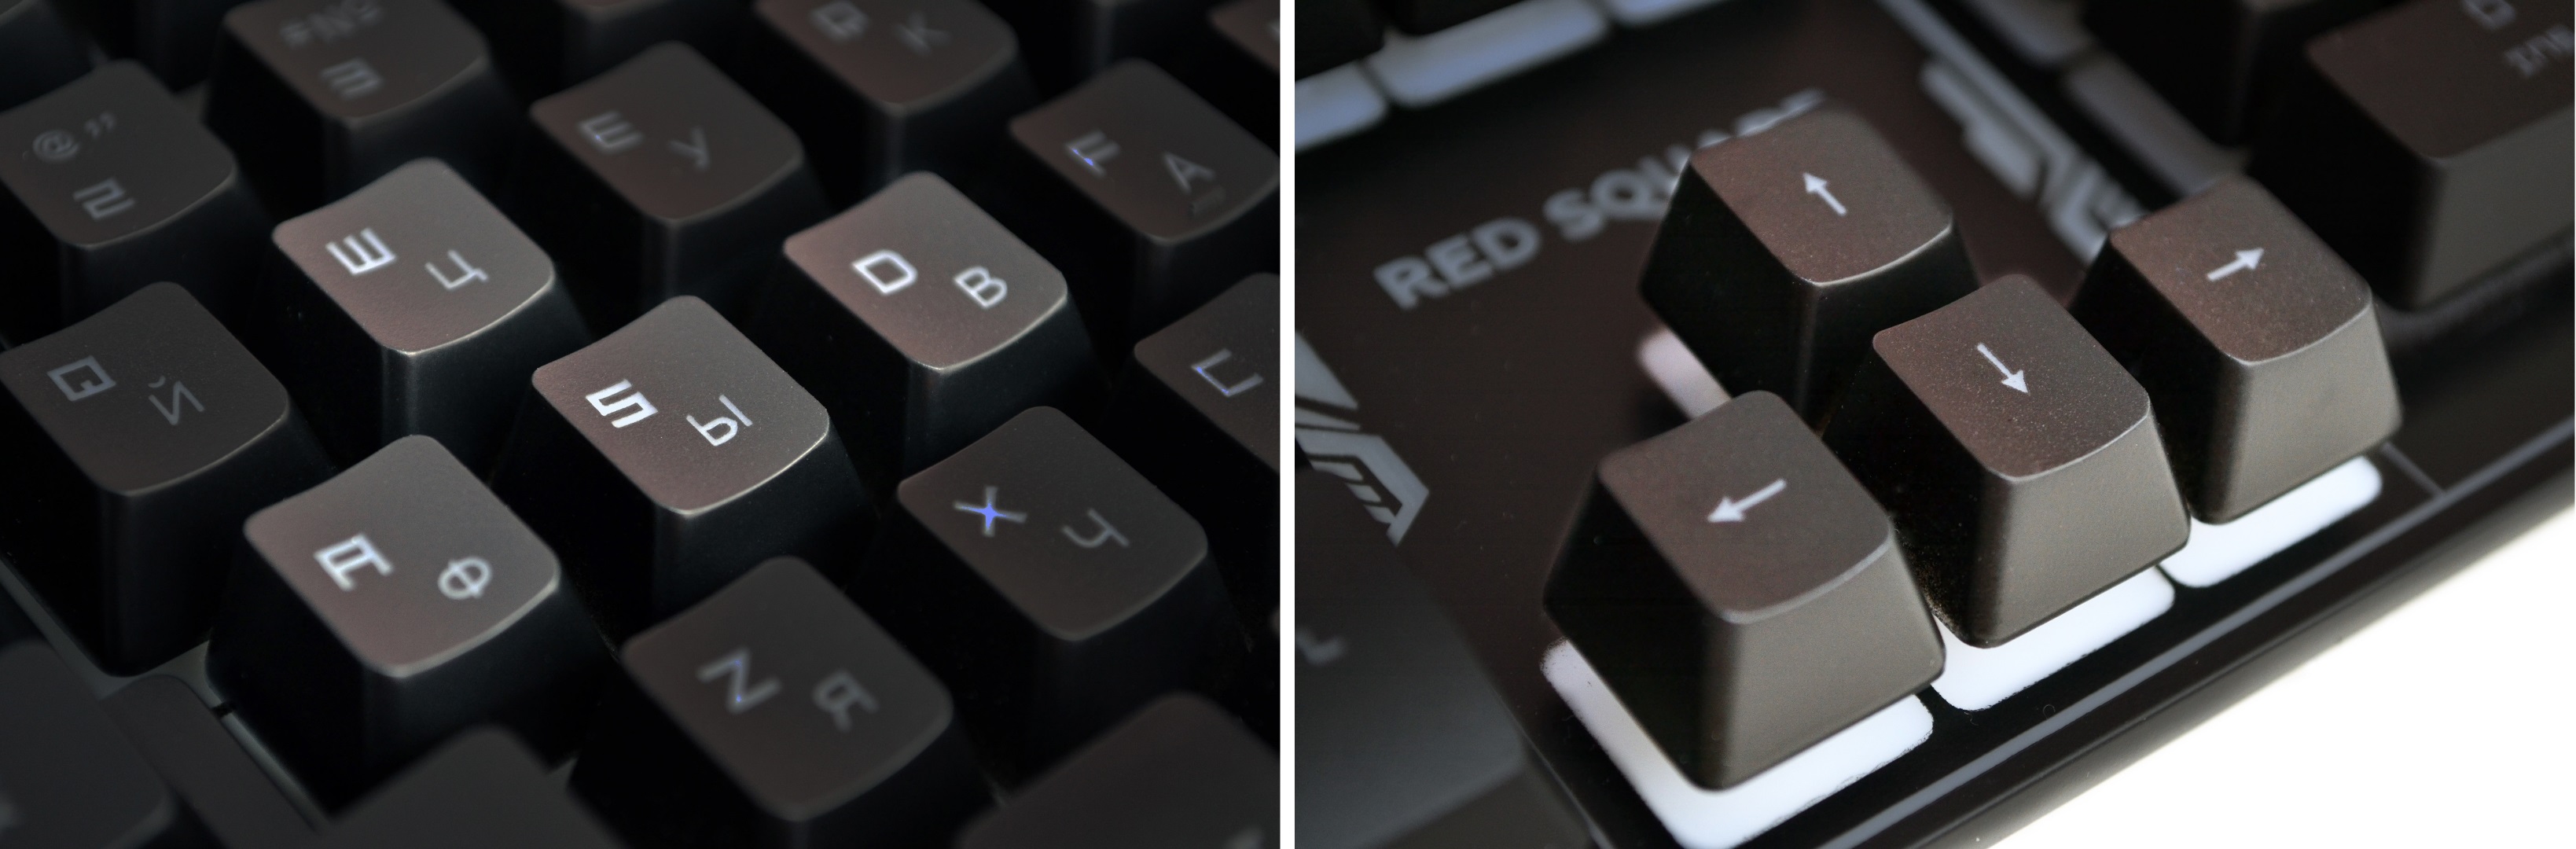 Поменялись кнопки wasd и стрелки. Поменялись местами клавиши WASD И стрелки. Клавиша FN на клавиатуре Red Square. Клавиатура Red Square комбинации клавиш. Регулировка подсветки на клавиатуре Red Square.